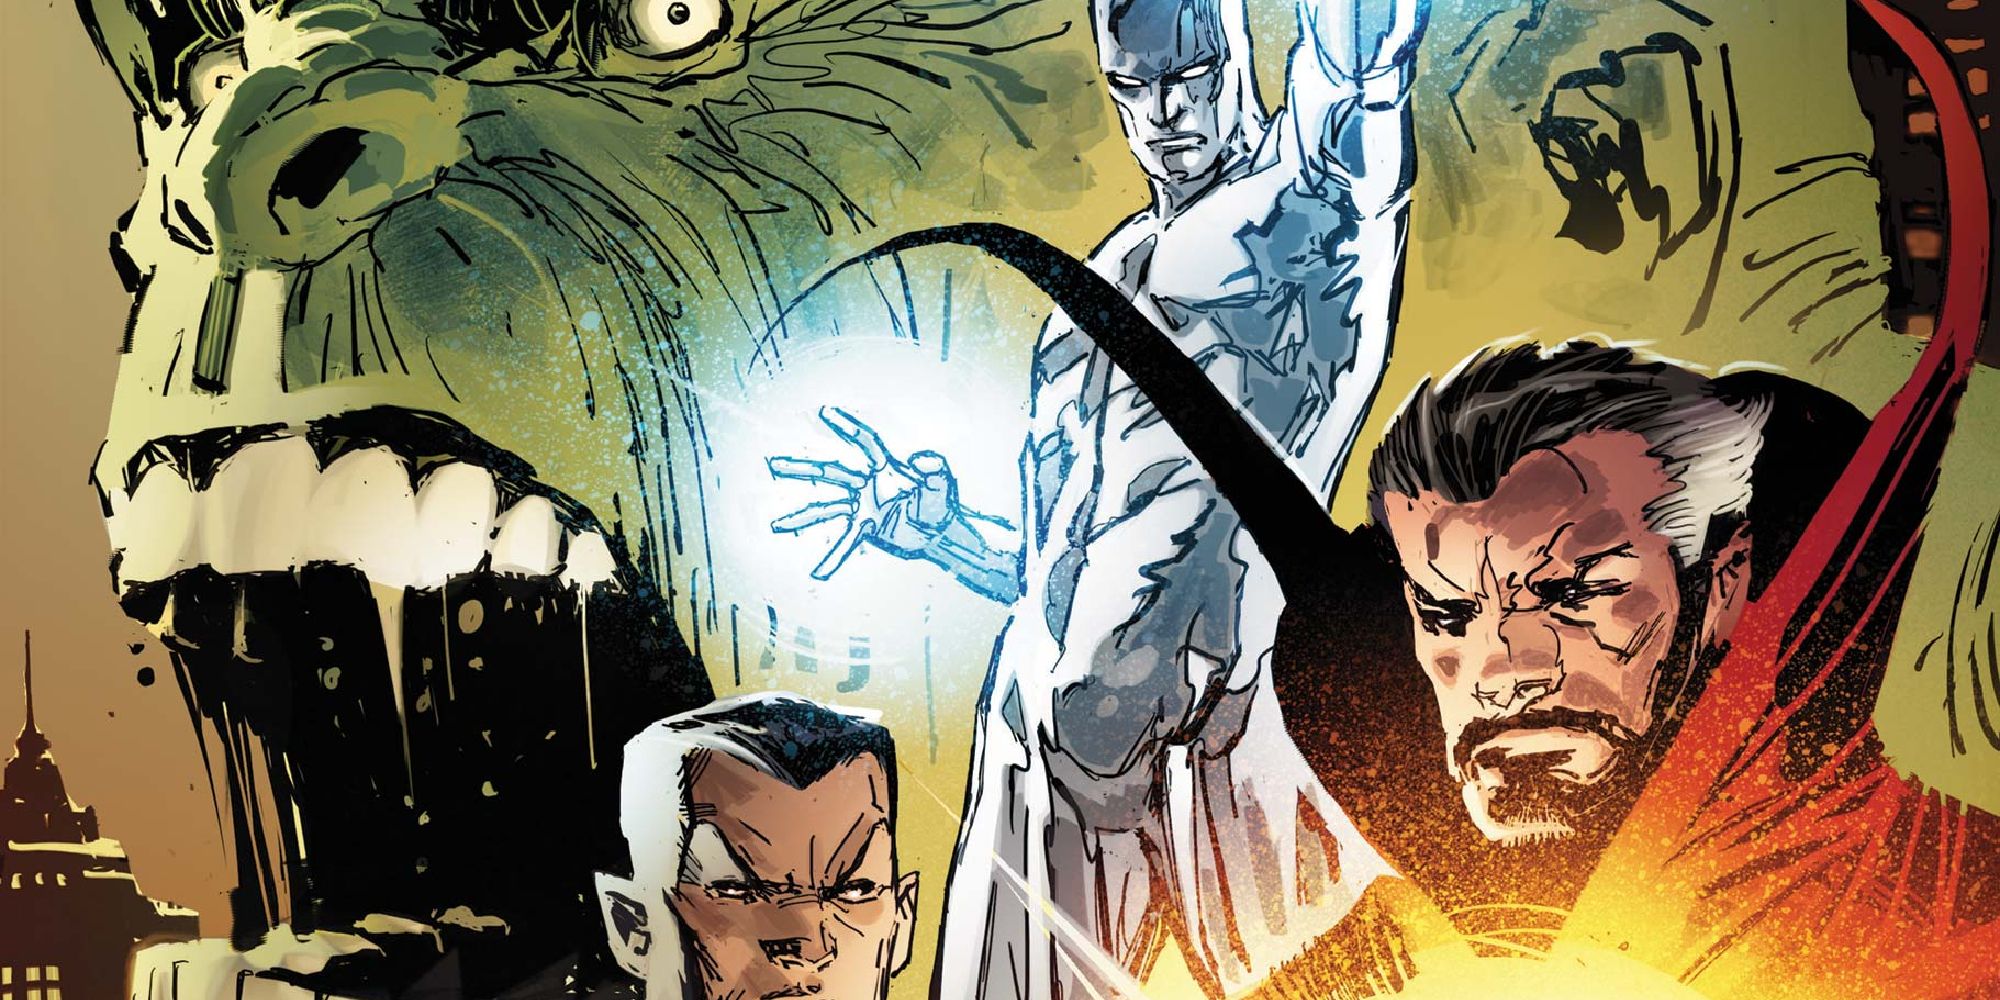 Strange, Namor, Silver Surfer, and Hulk in a cover for Best Defense: Defenders